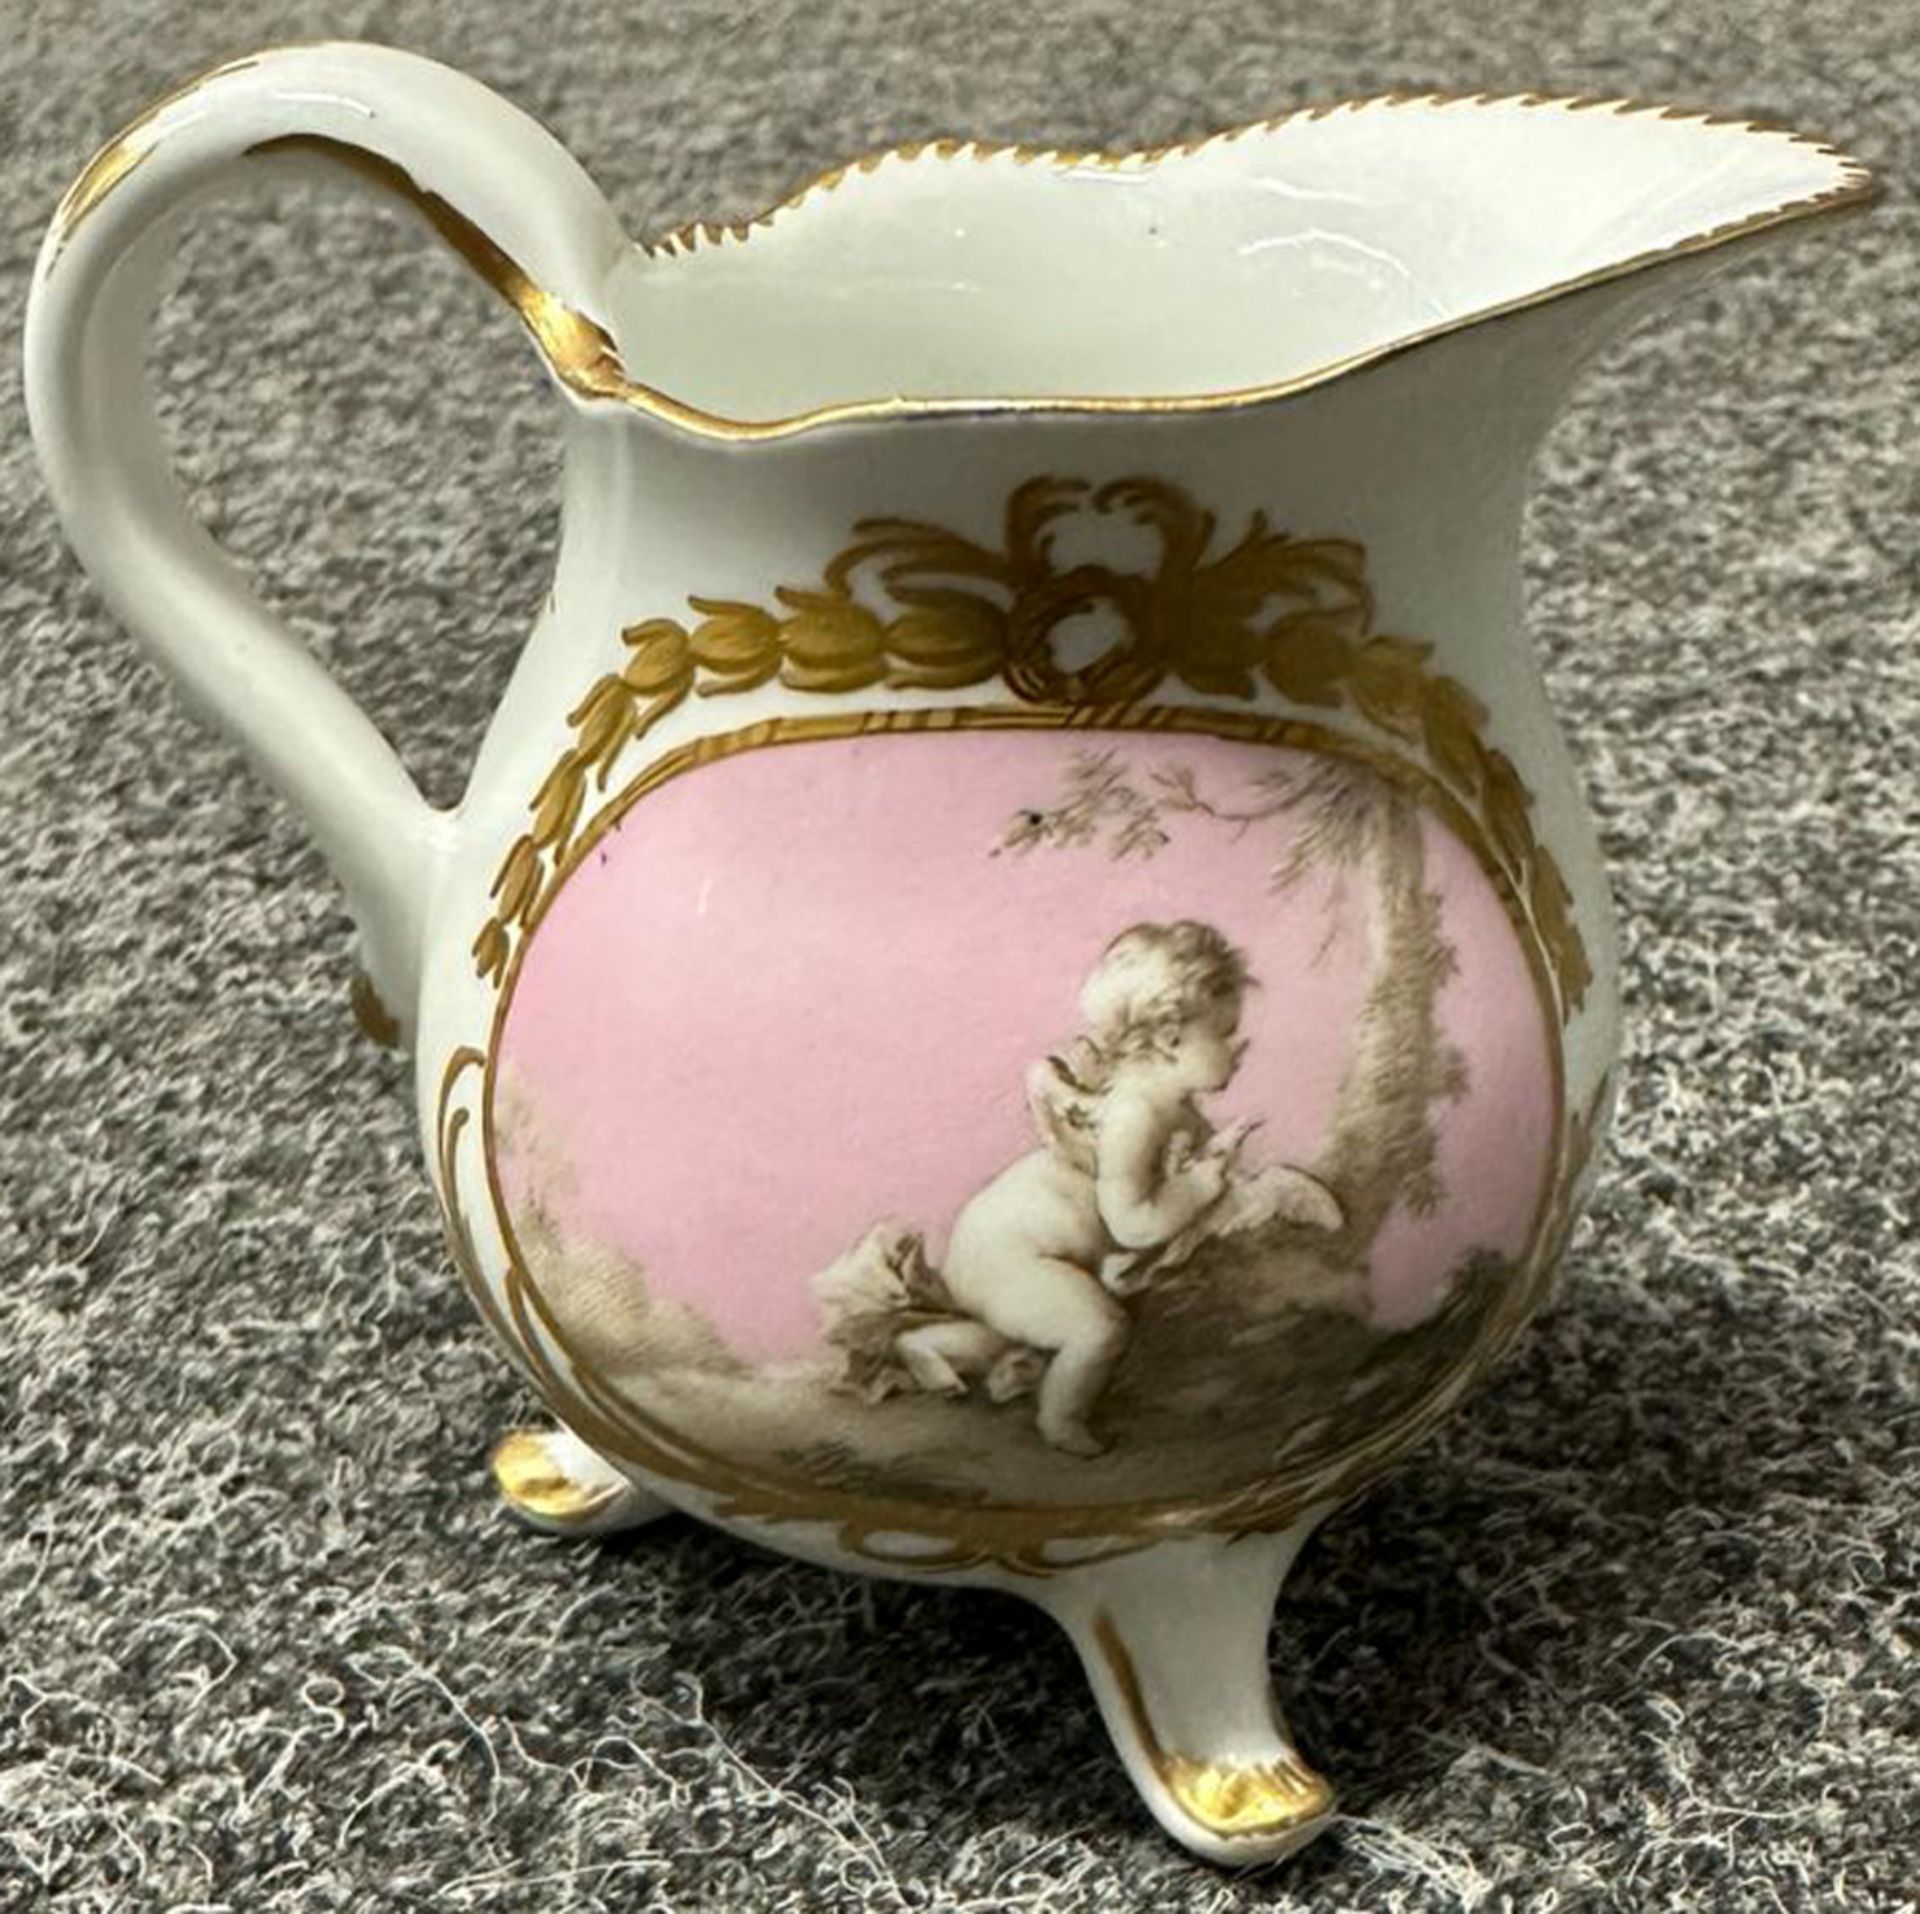 Achttlgs. Reiseservice im Koffer. Meissen 1763-73. Porzellan, auf rosafarbenem Fonds graucamaieu - Image 16 of 34